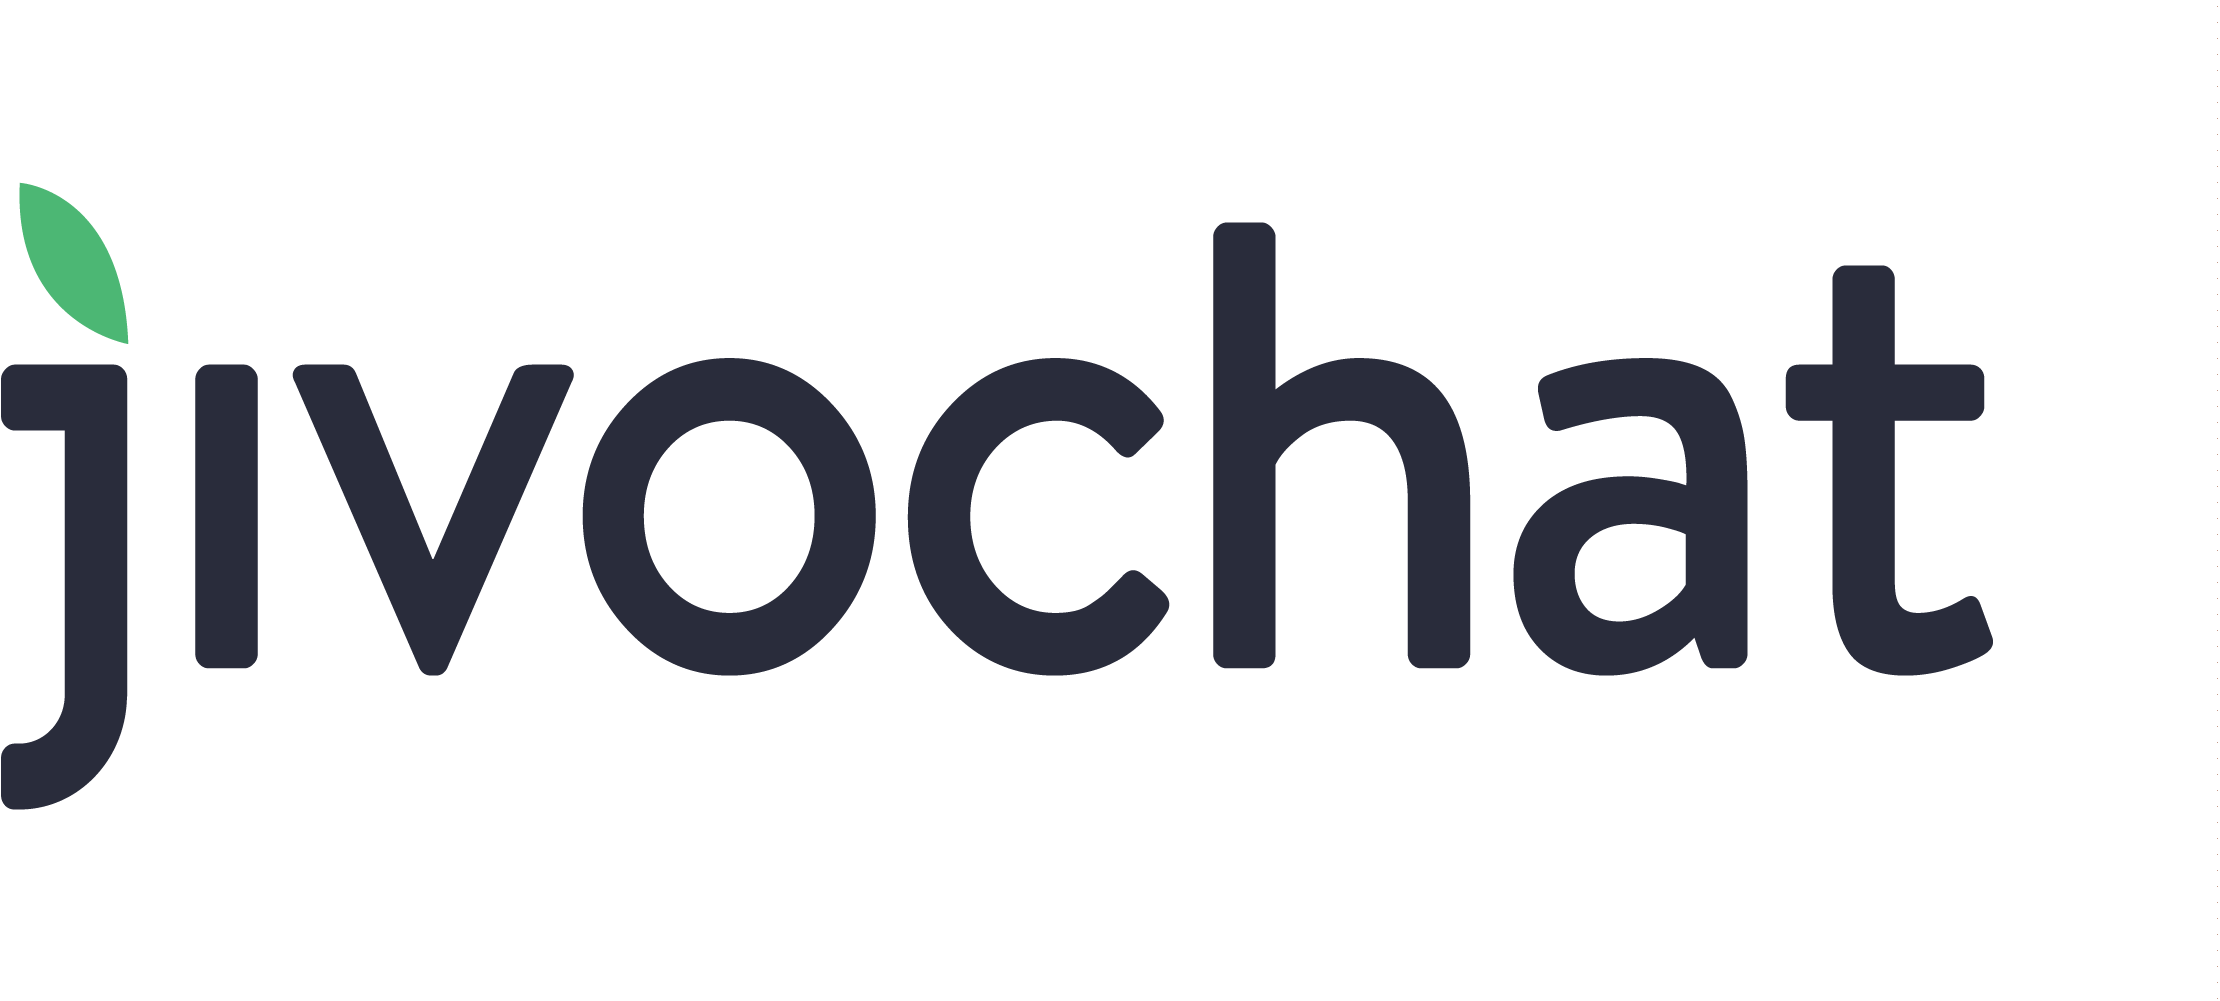 Jivochat Logo - Graphics Clipart (2455x1000), Png Download